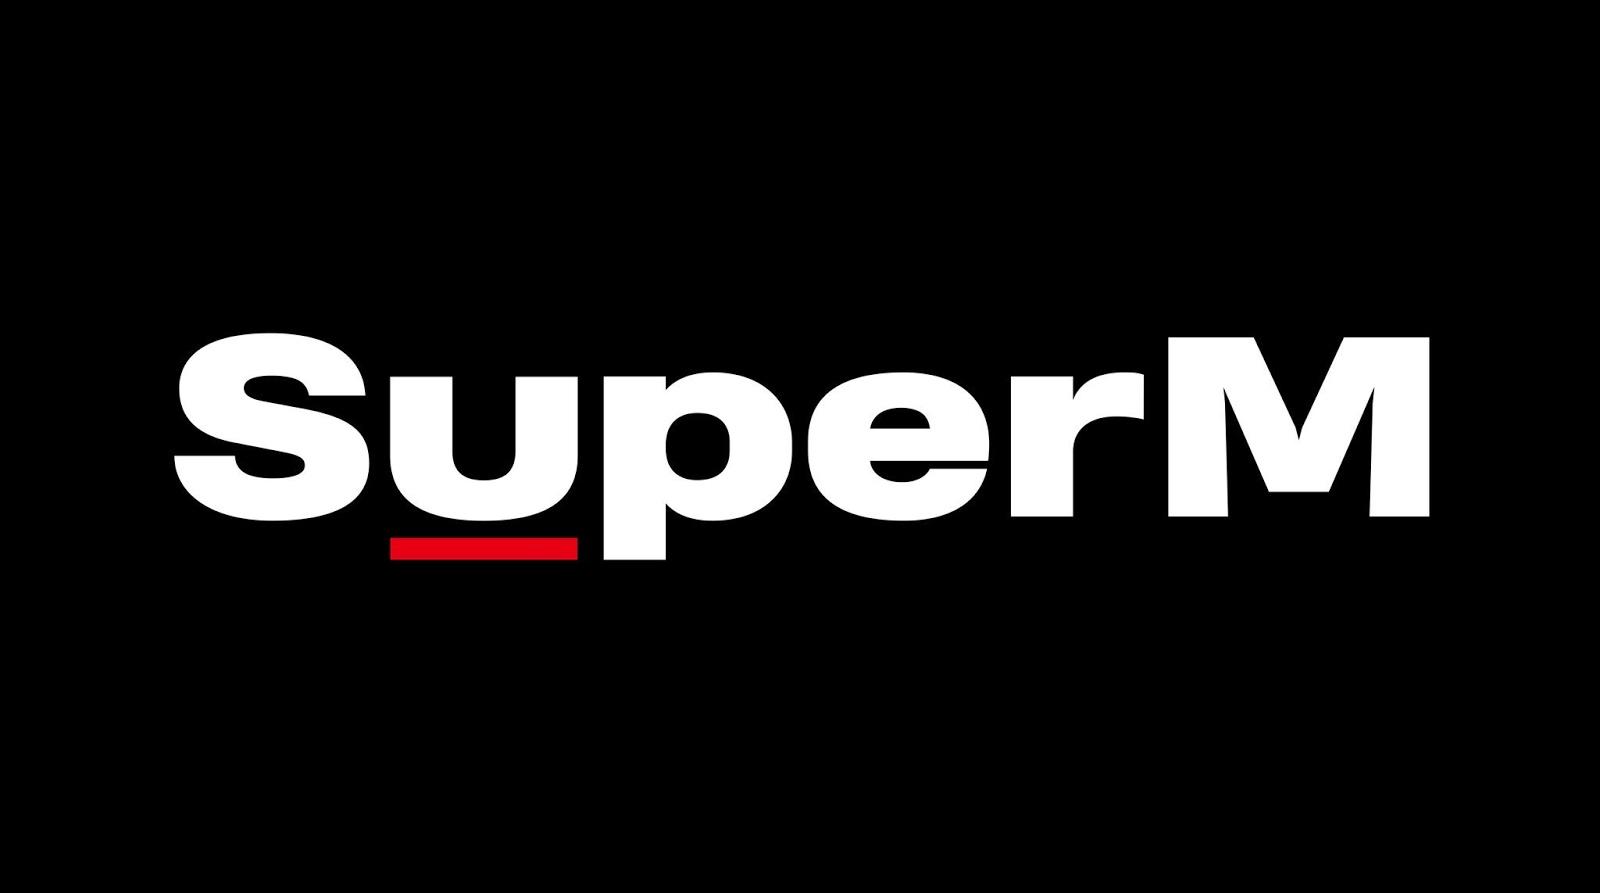 SuperM Avengers Of Kpop. New Kpop Group